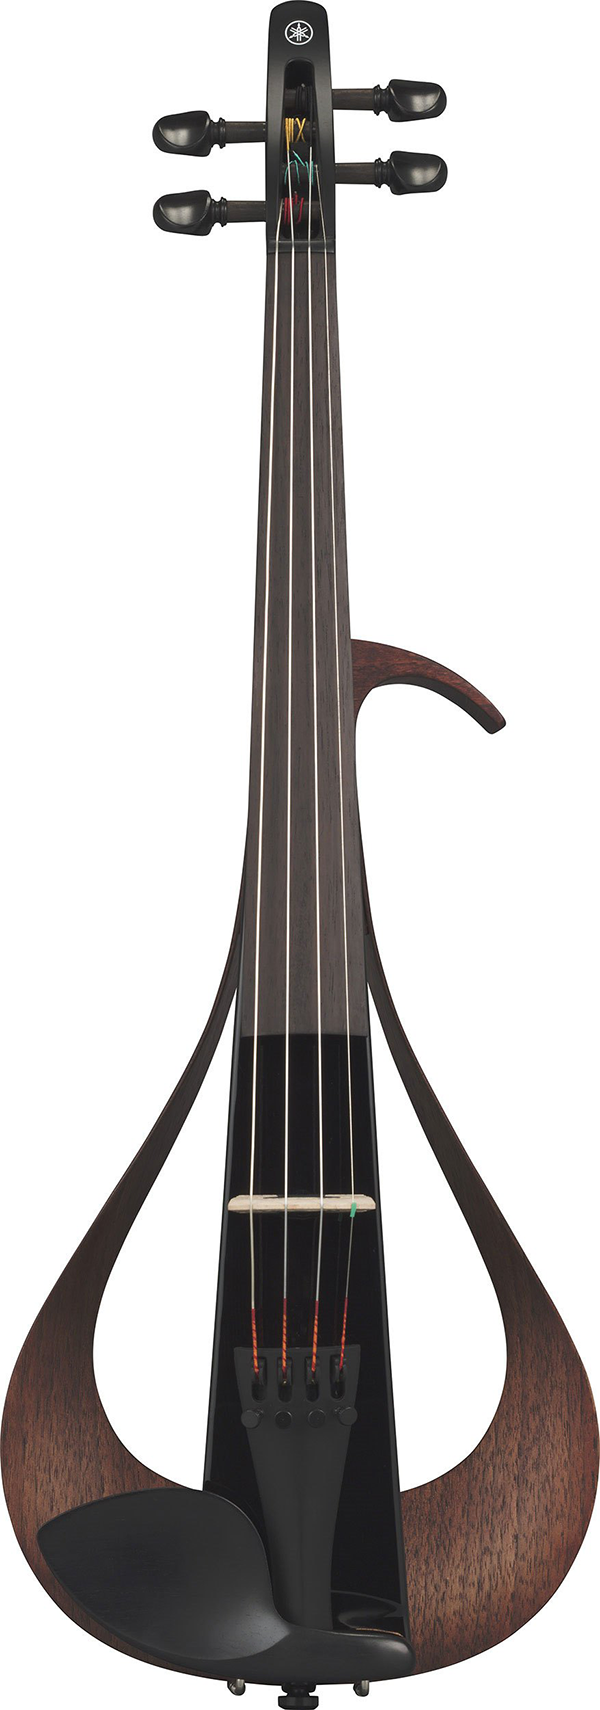 Yamaha Electric Violin 4 String Black